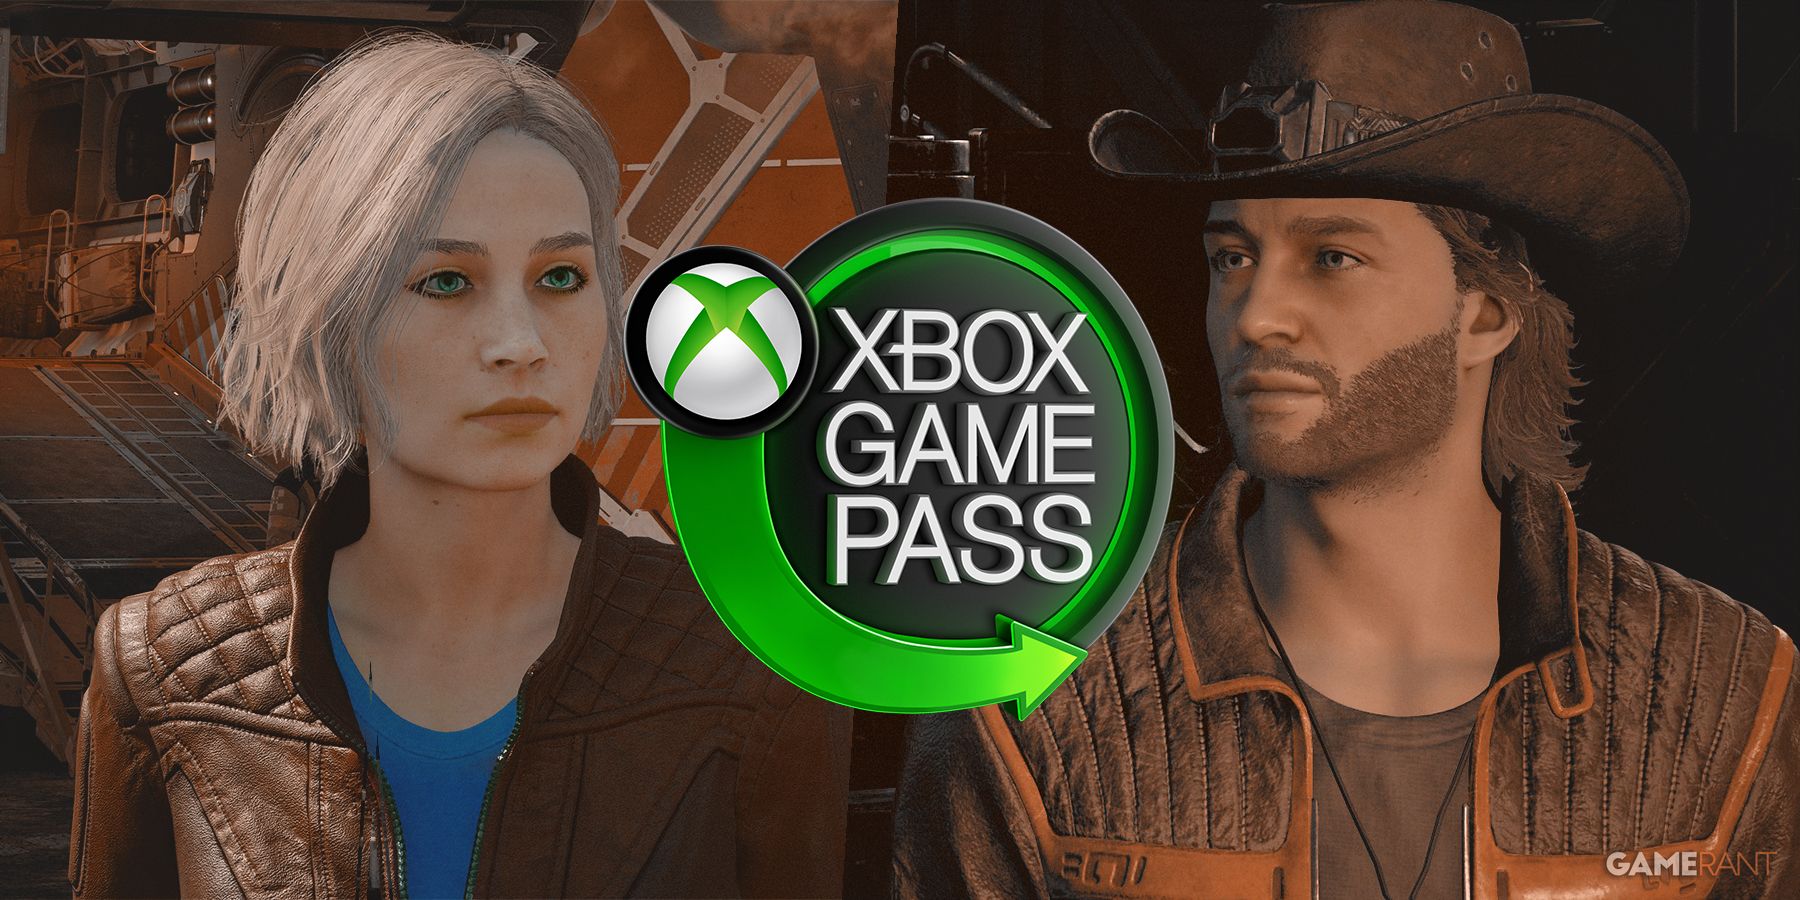 Sarah Morgan and Sam Coe behind Xbox Game Pass emblem